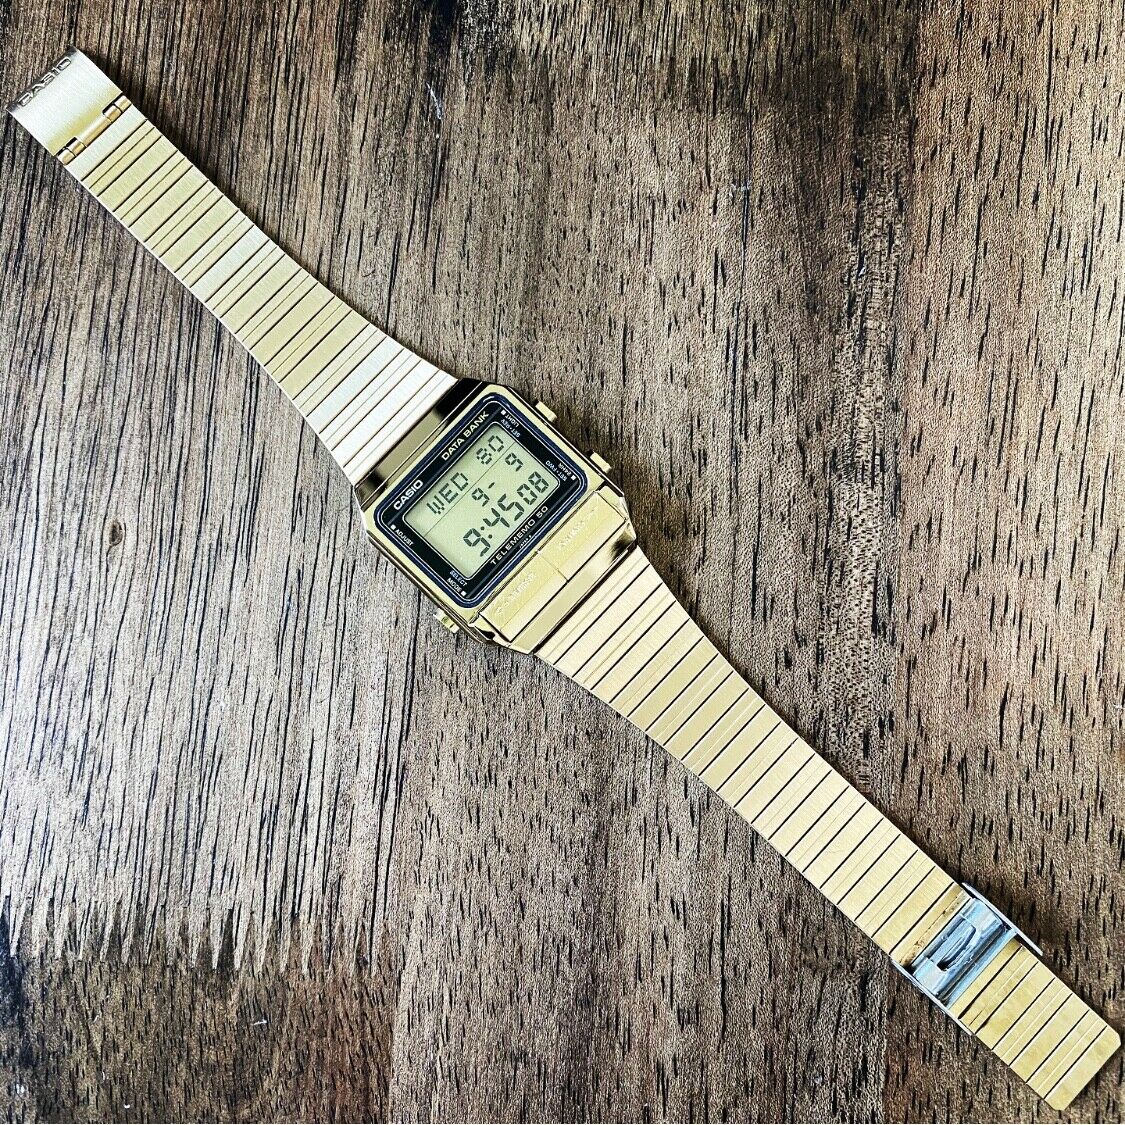 CLEAN Vintage 1984 Casio DB-500G Digital Data Bank Watch Made in